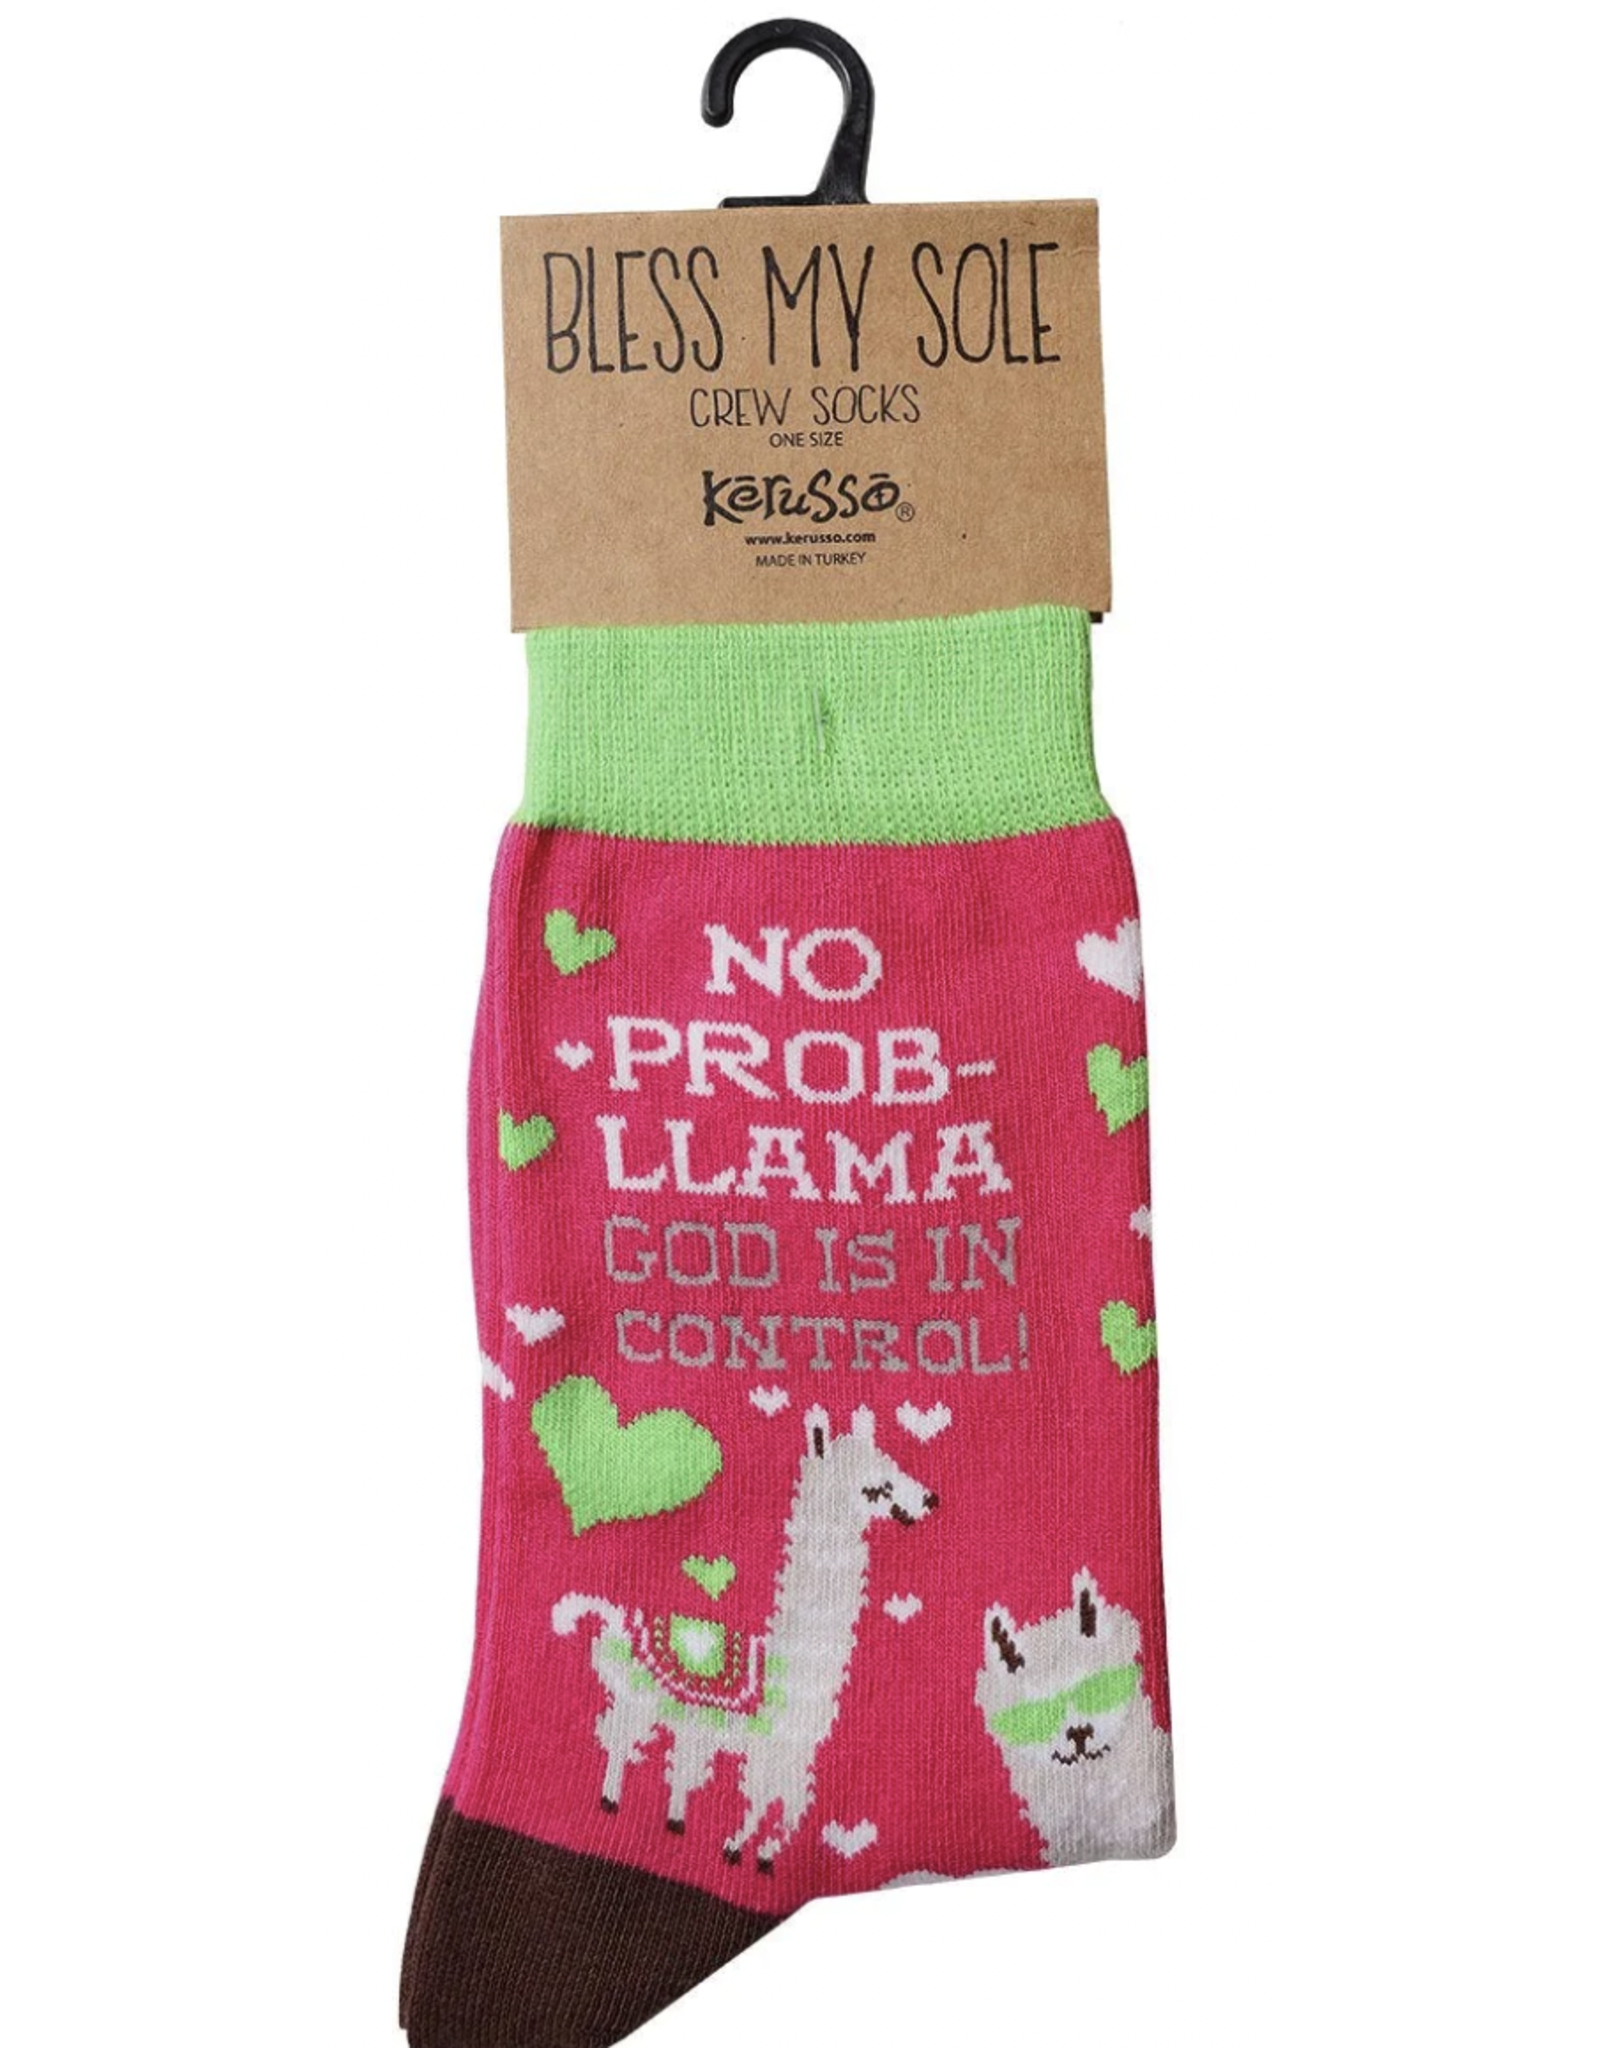 Bless my Sole Bless My Sole Socks - Llama